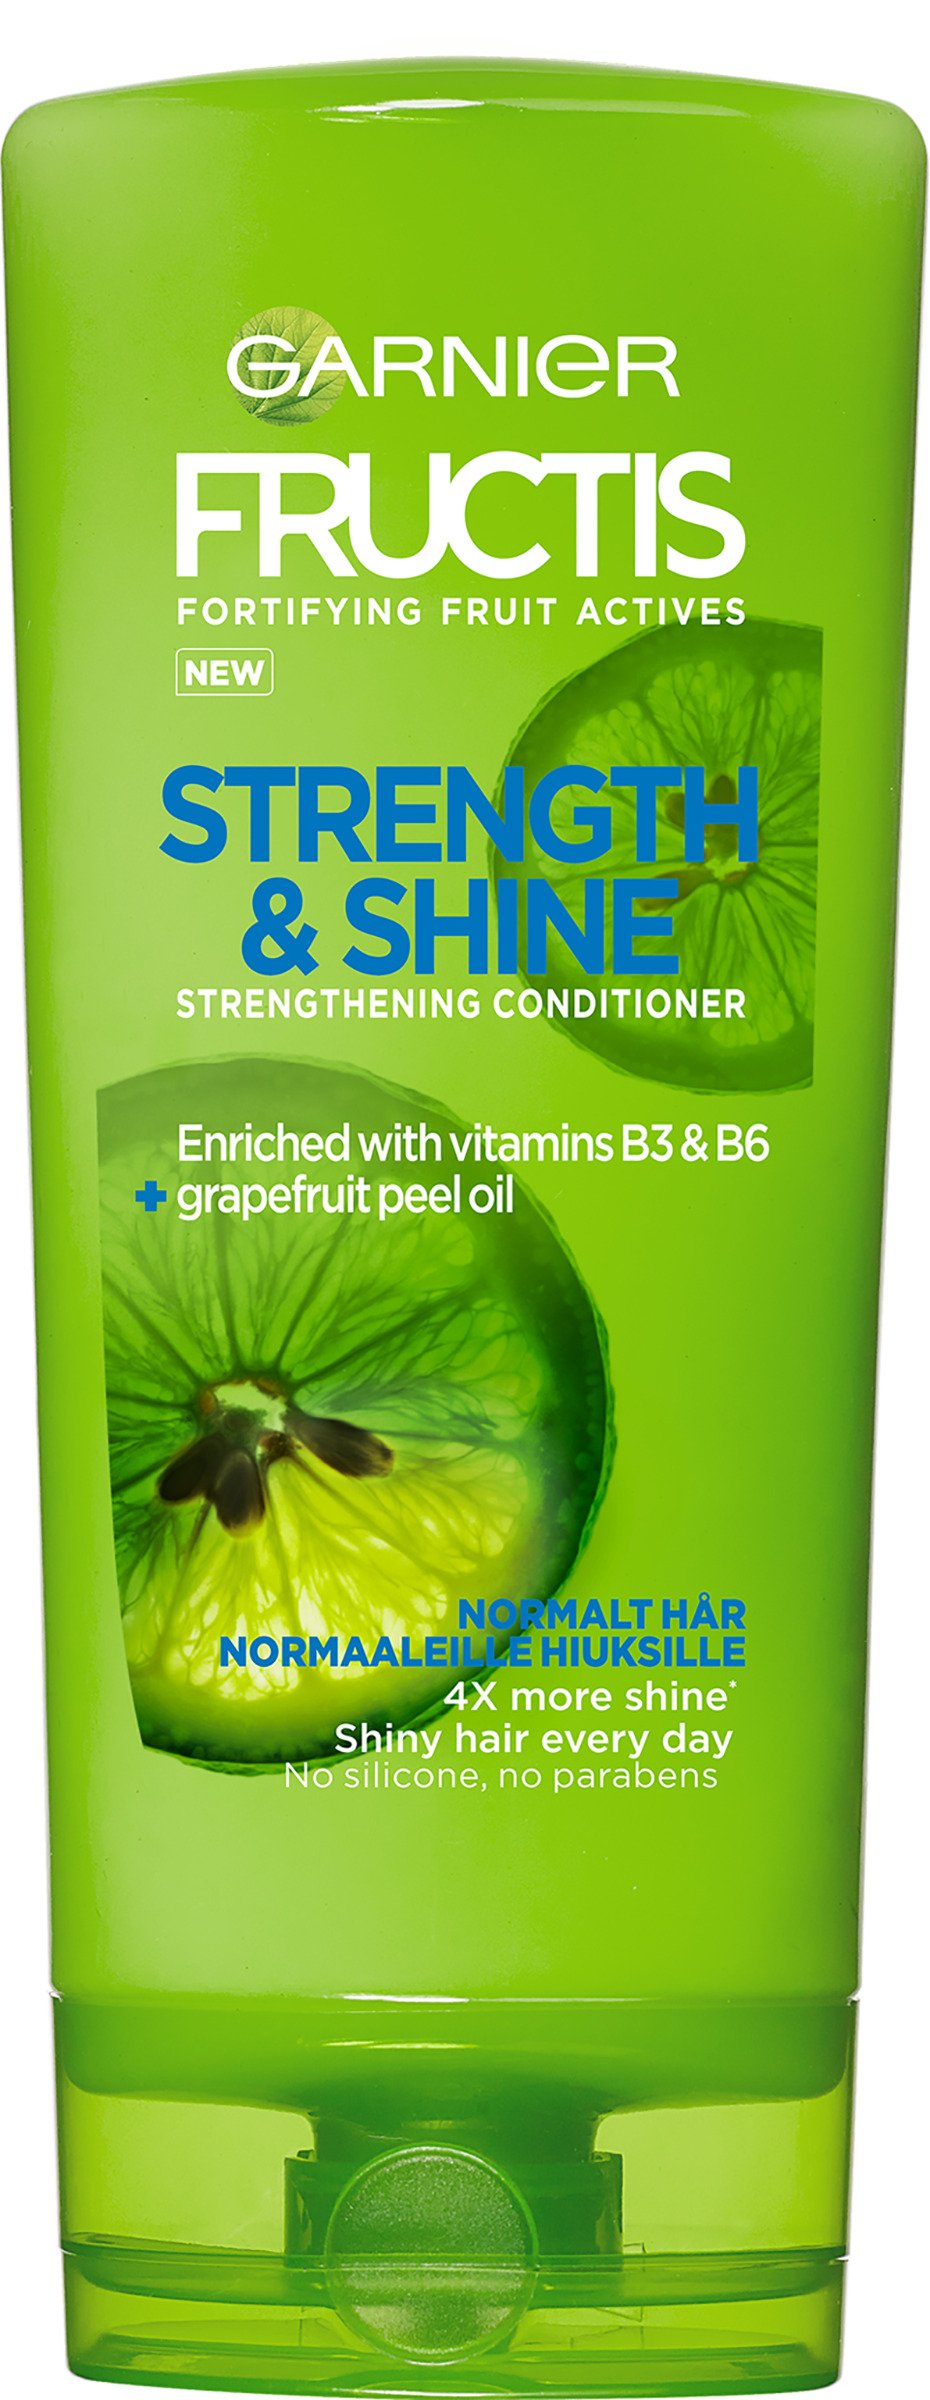 Garnier Fructis Strenght & Shine Normal Balsam 200 ml